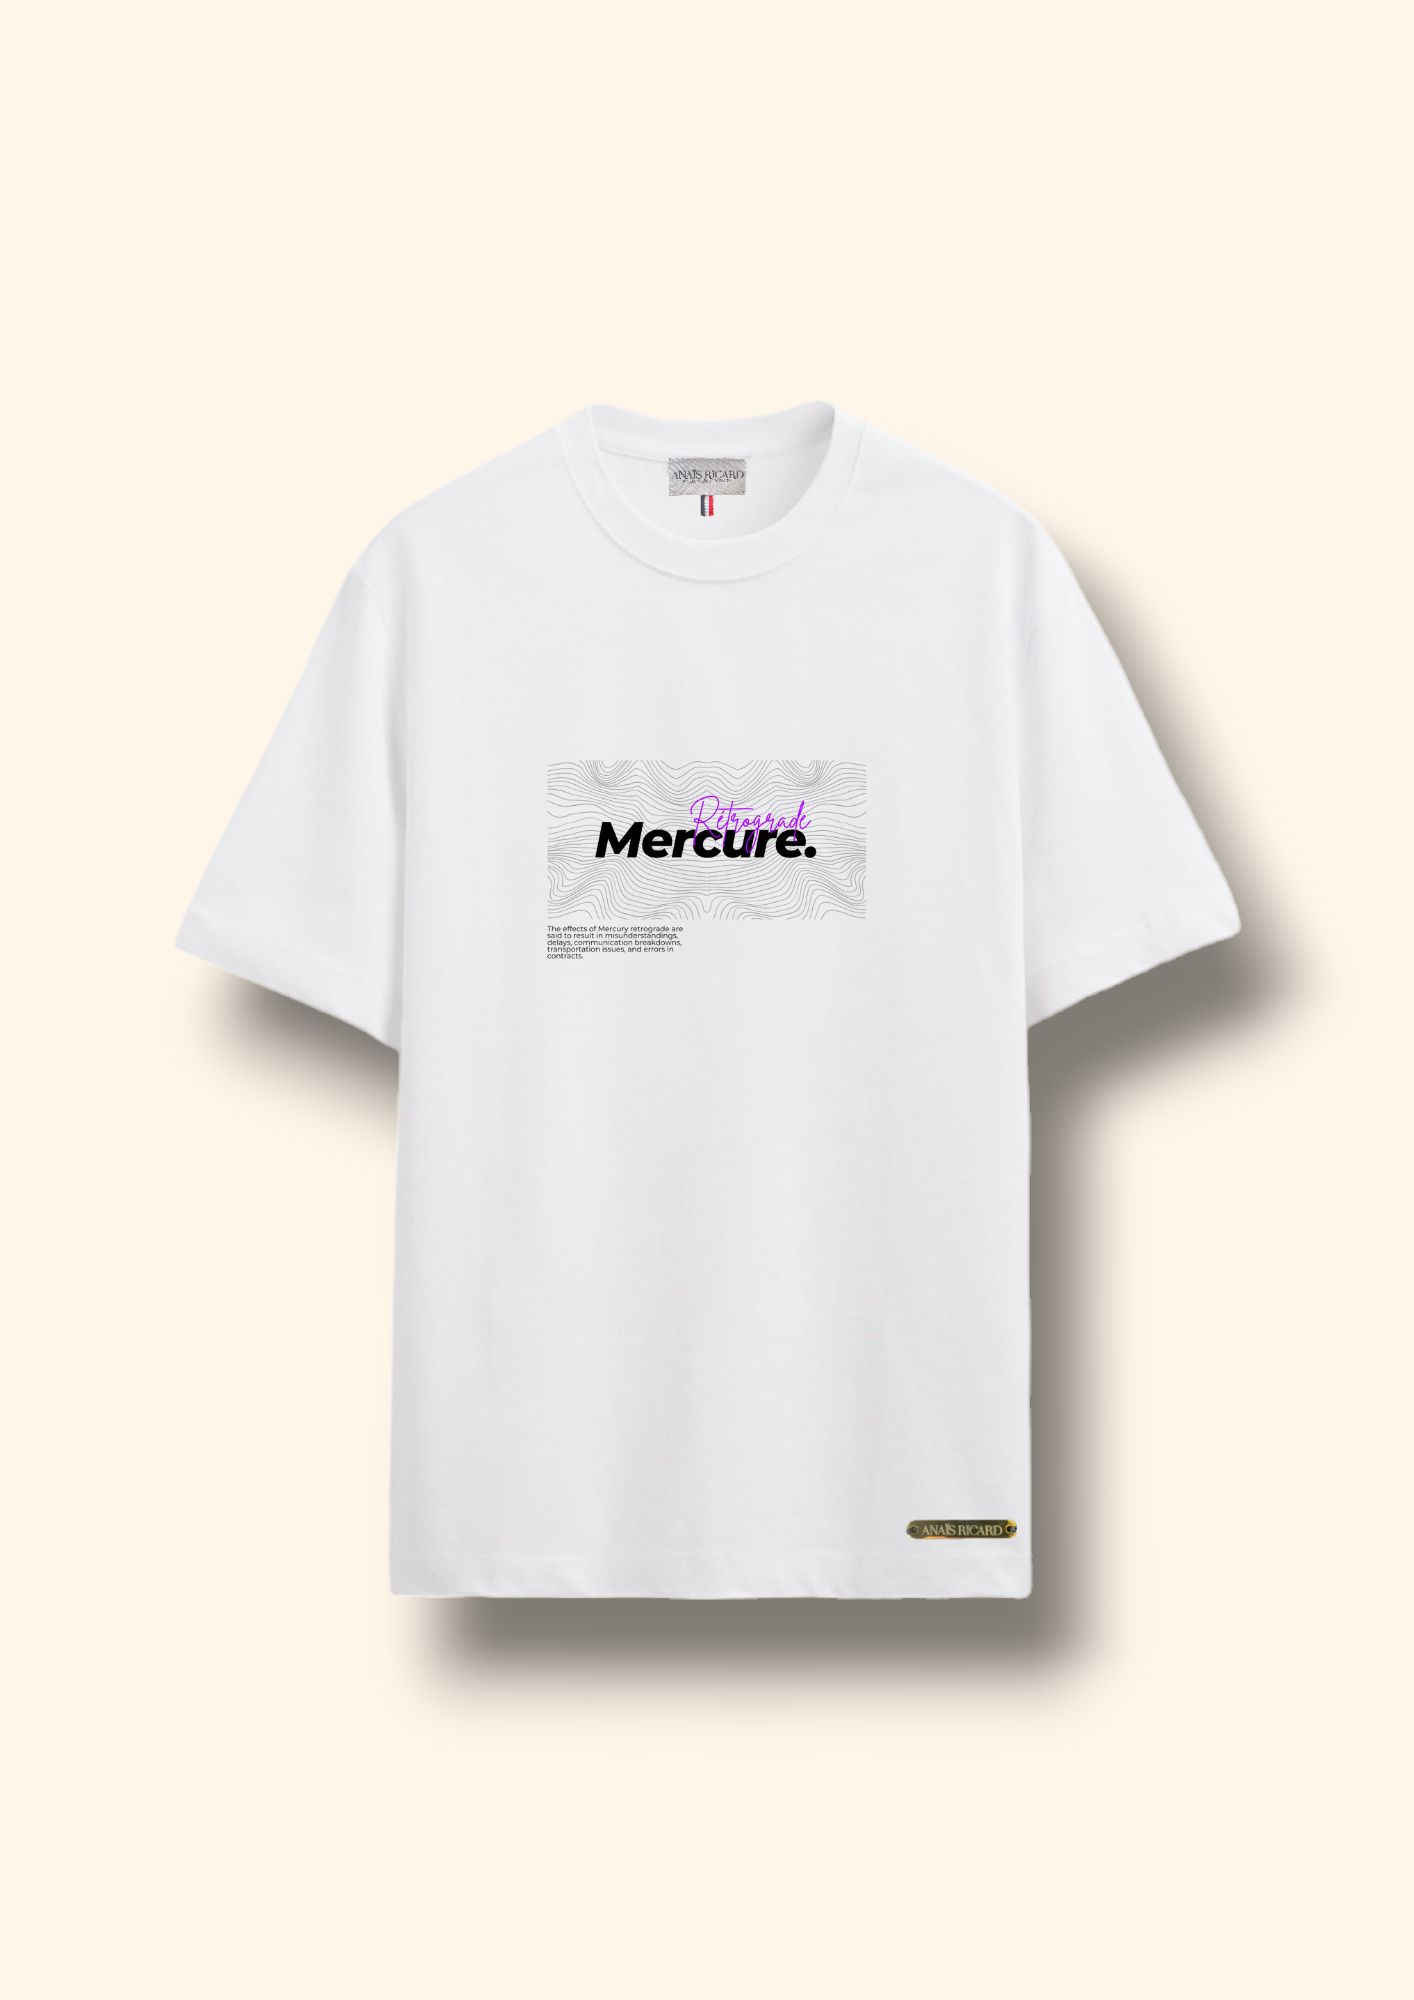 Édition limitée | Tee-shirt oversize Mercure rétrograde